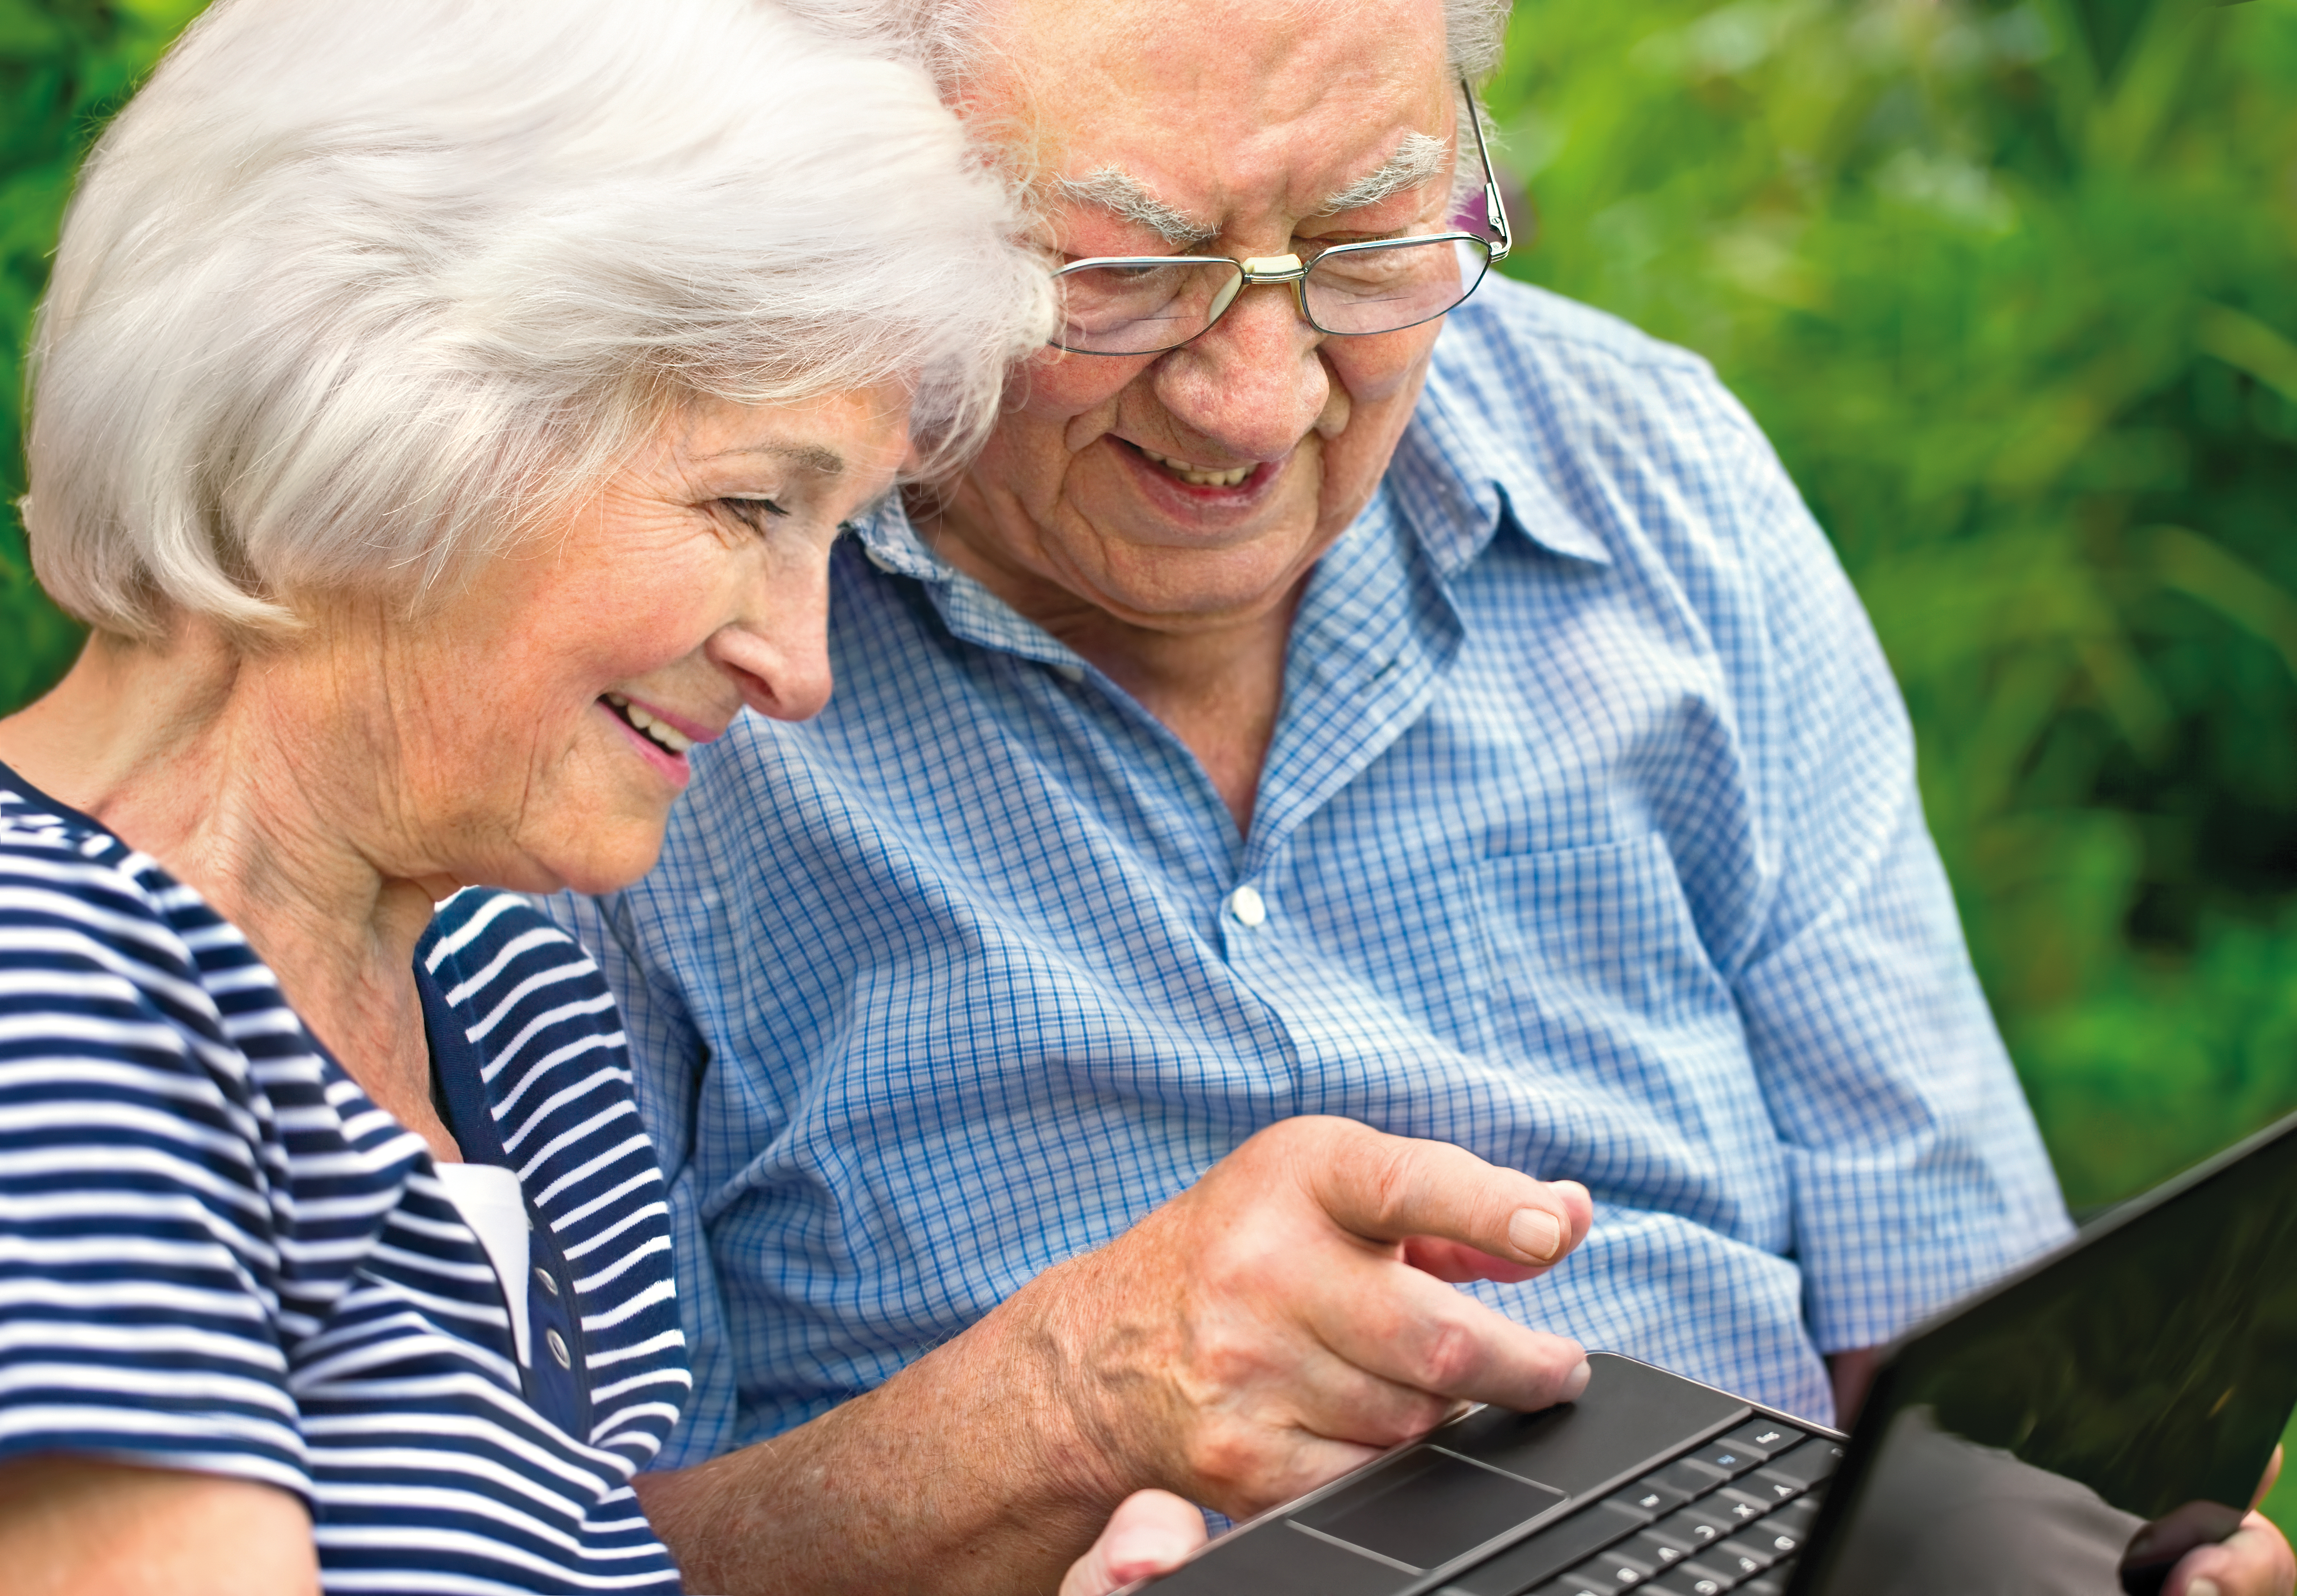 An elderly couple on video call | Source: Shutterstock